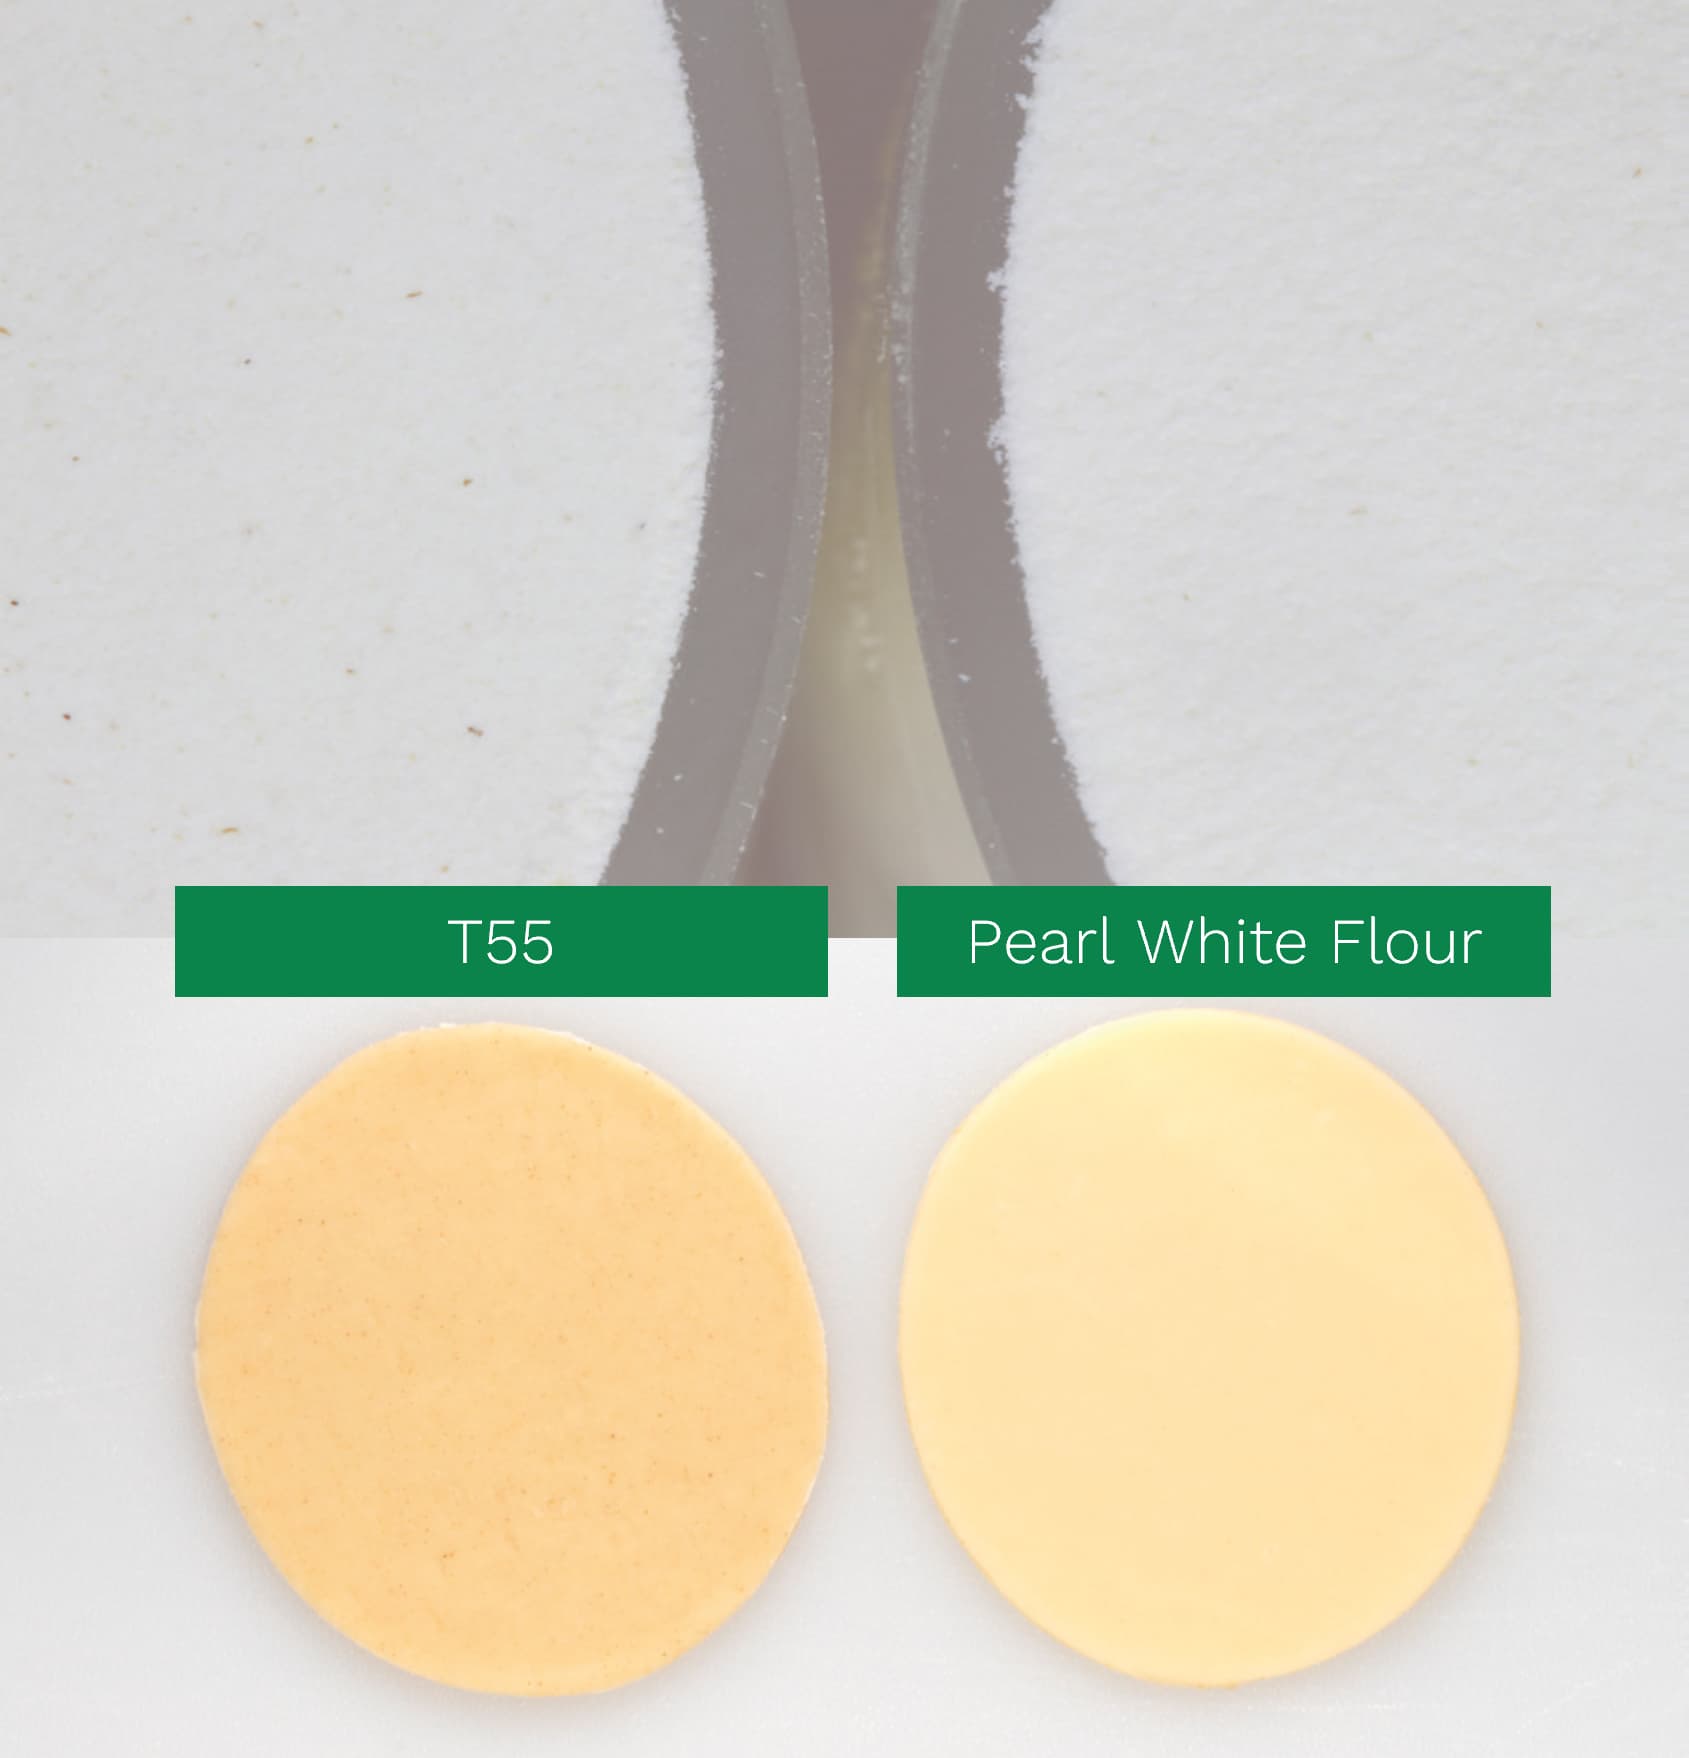 T55 vs Flour Pearl White